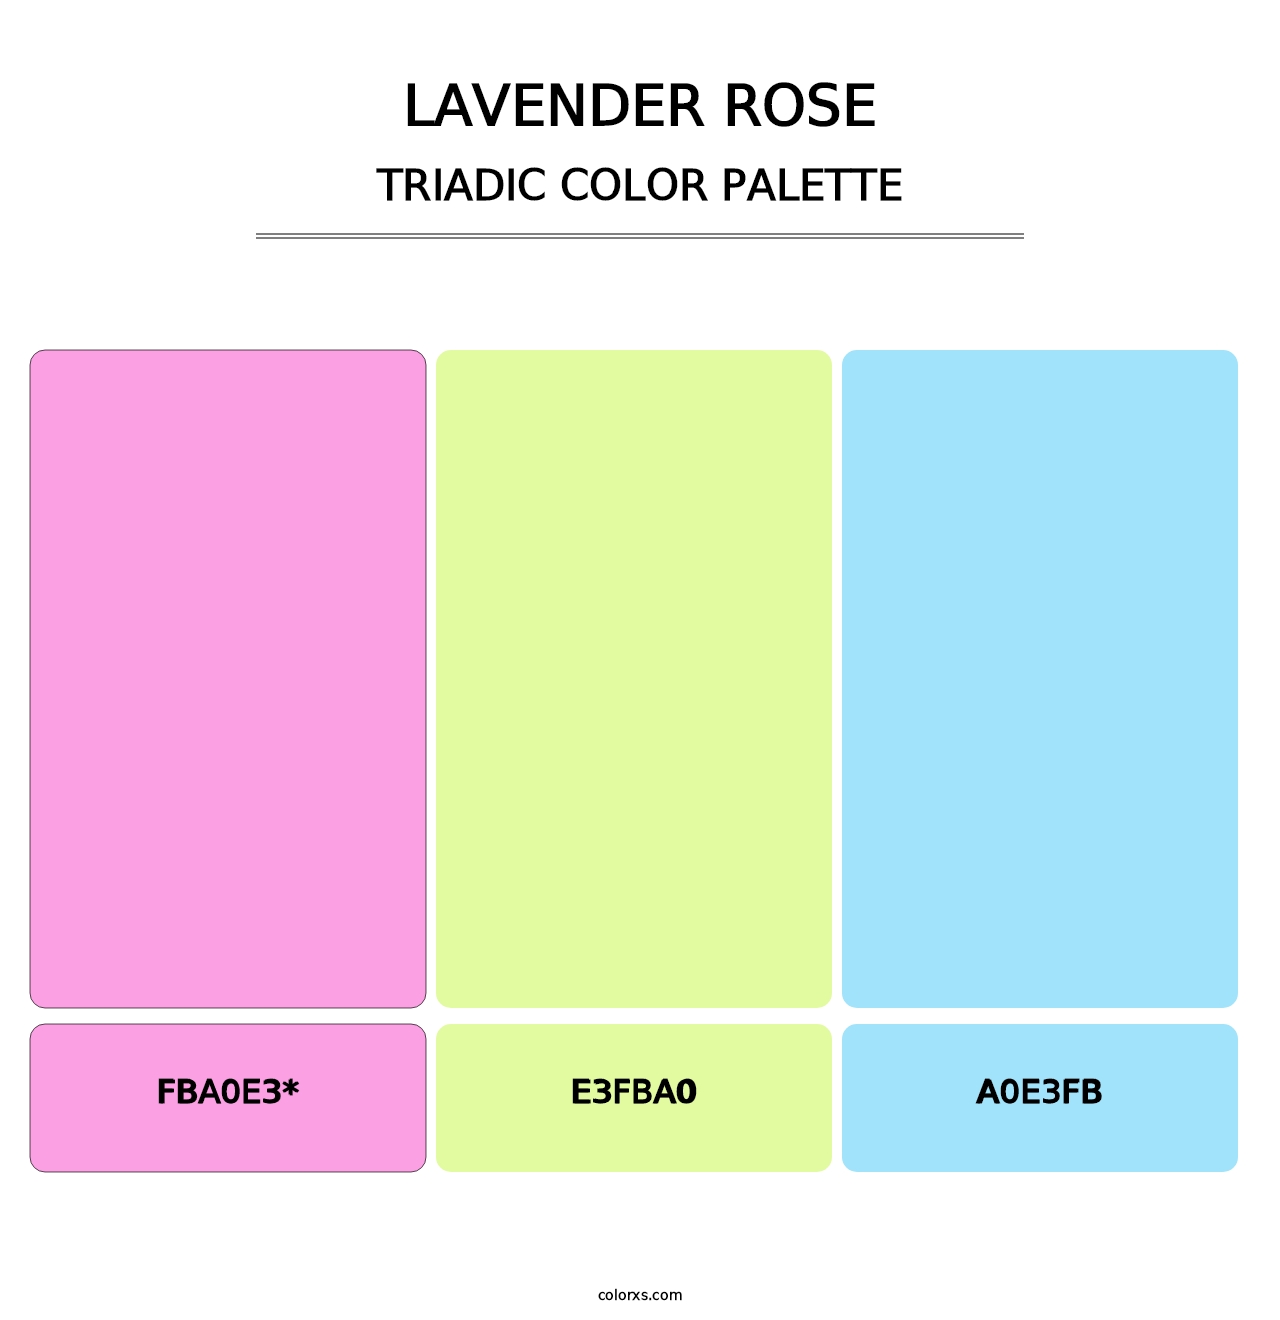 Lavender Rose - Triadic Color Palette